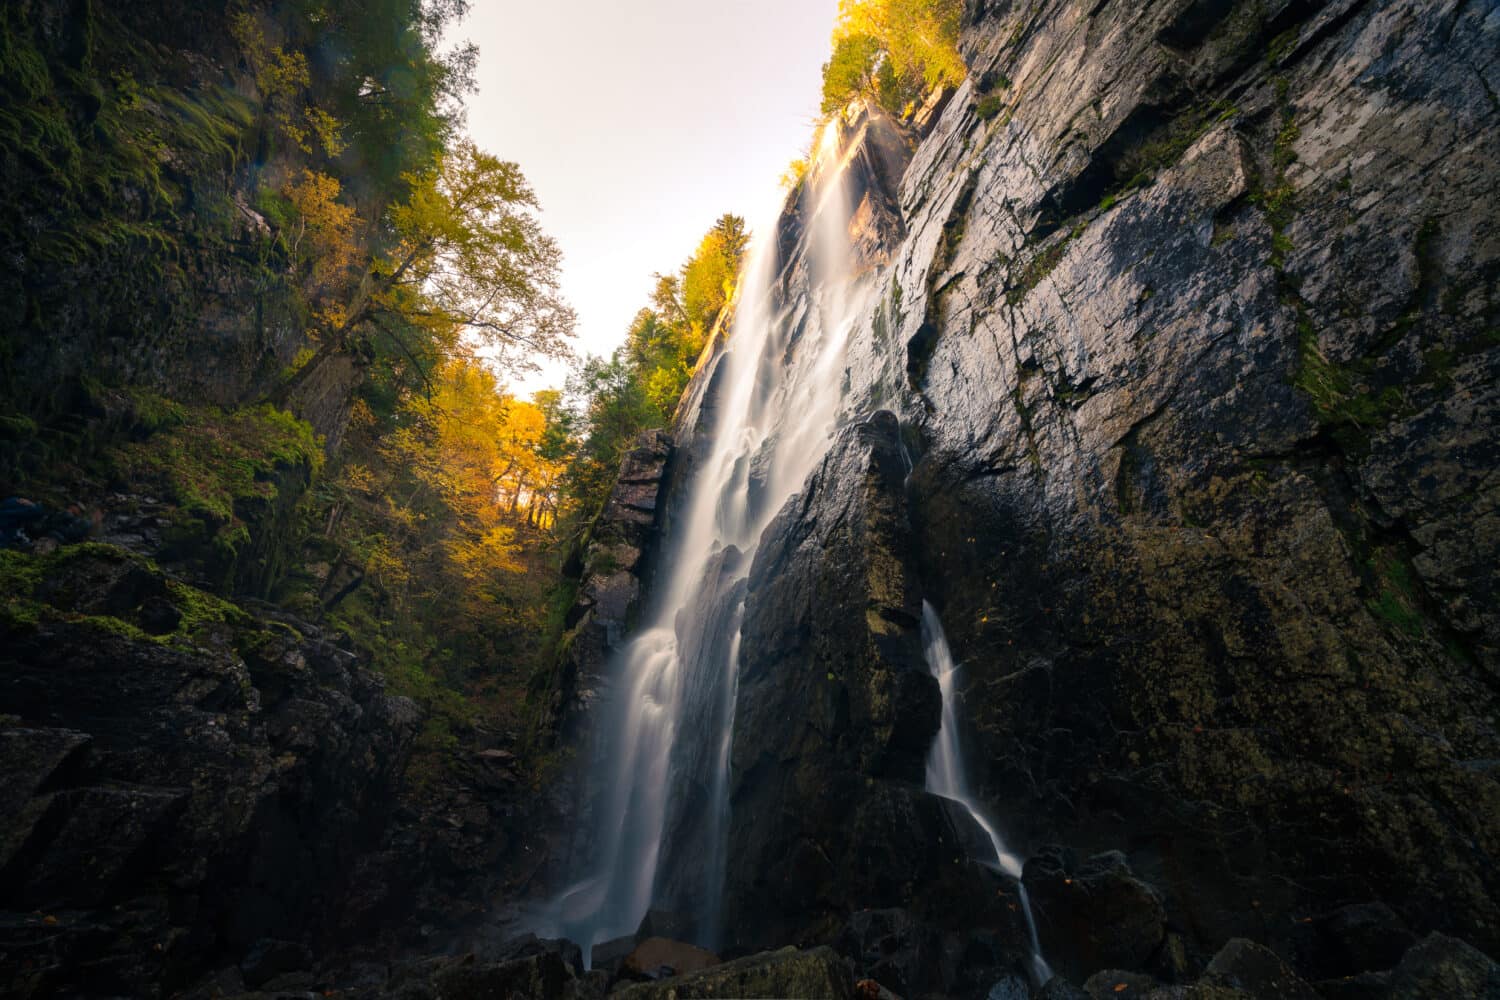 Rainbow Falls Waterfall with Autumn Fall Colors near Lake Placid, Adirondacks, NY